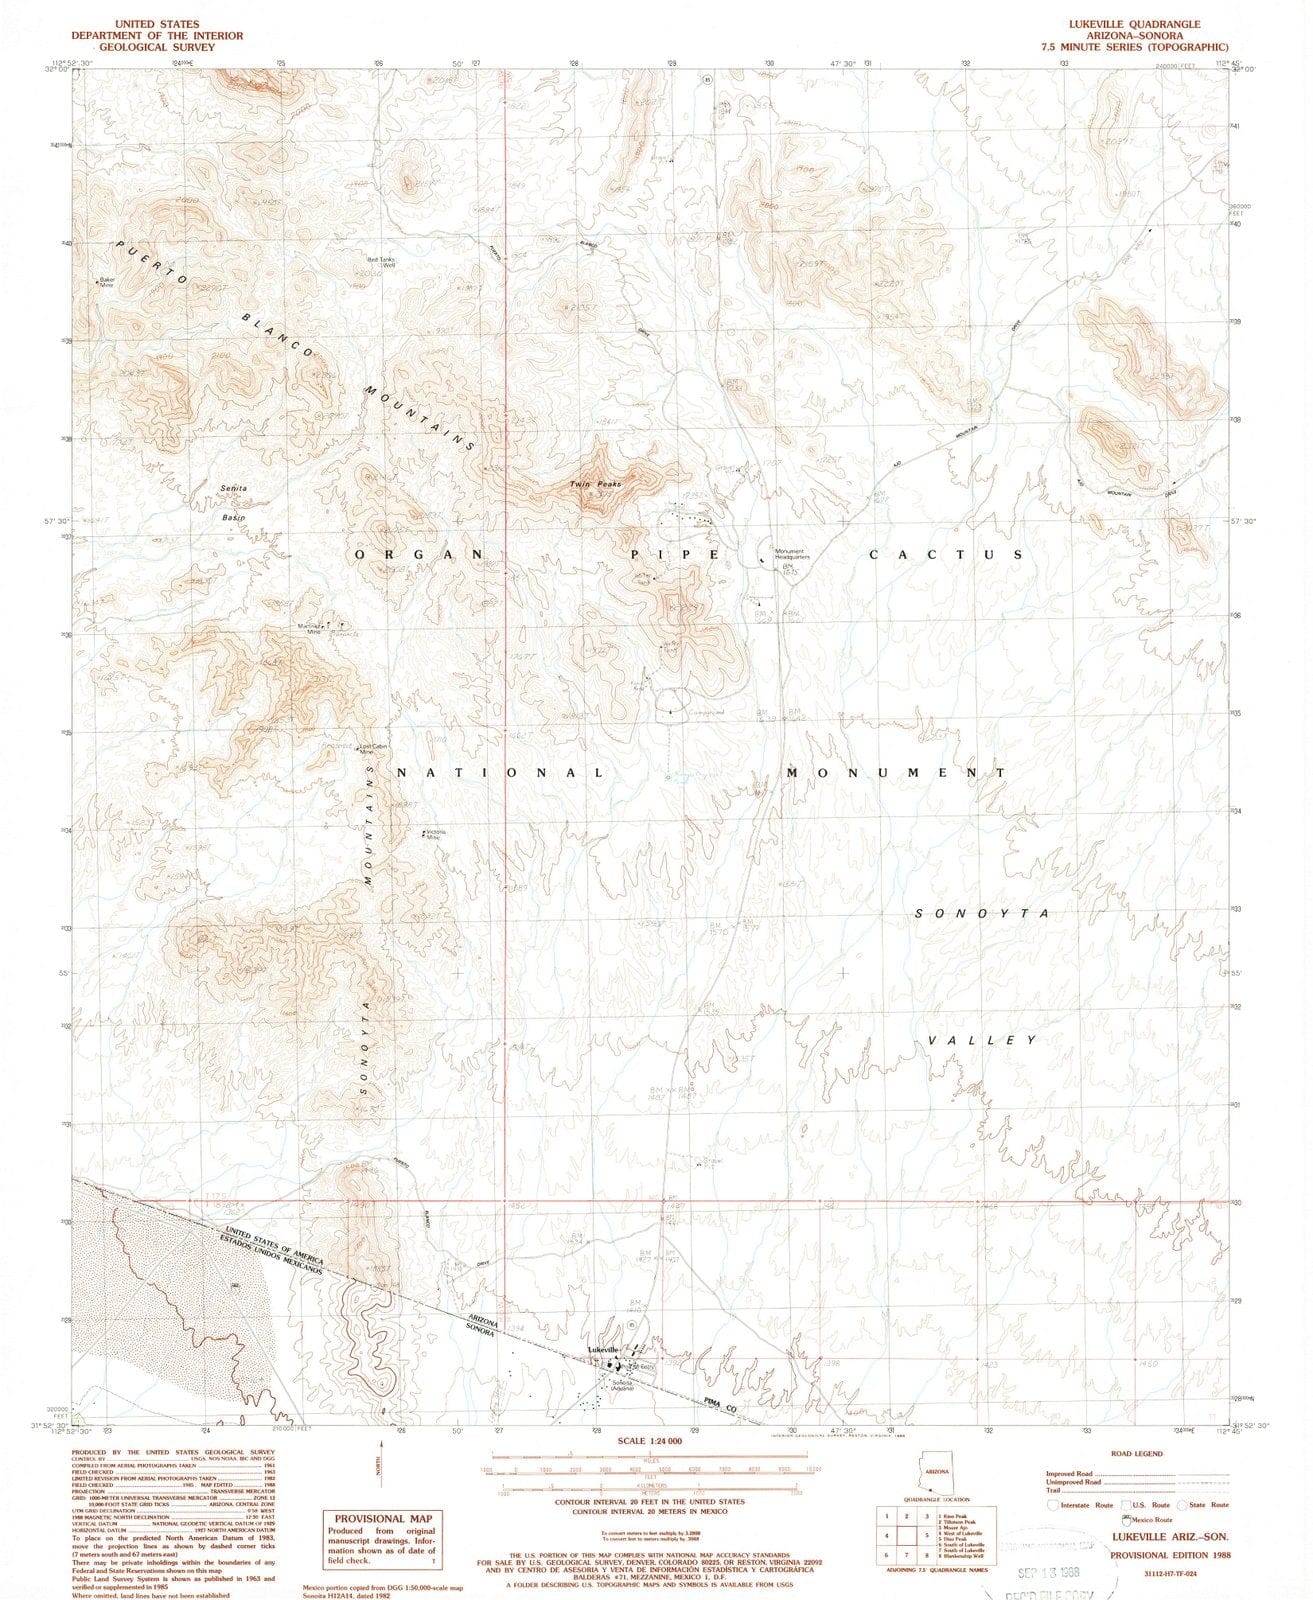 1988 Lukeville, AZ - Arizona - USGS Topographic Map